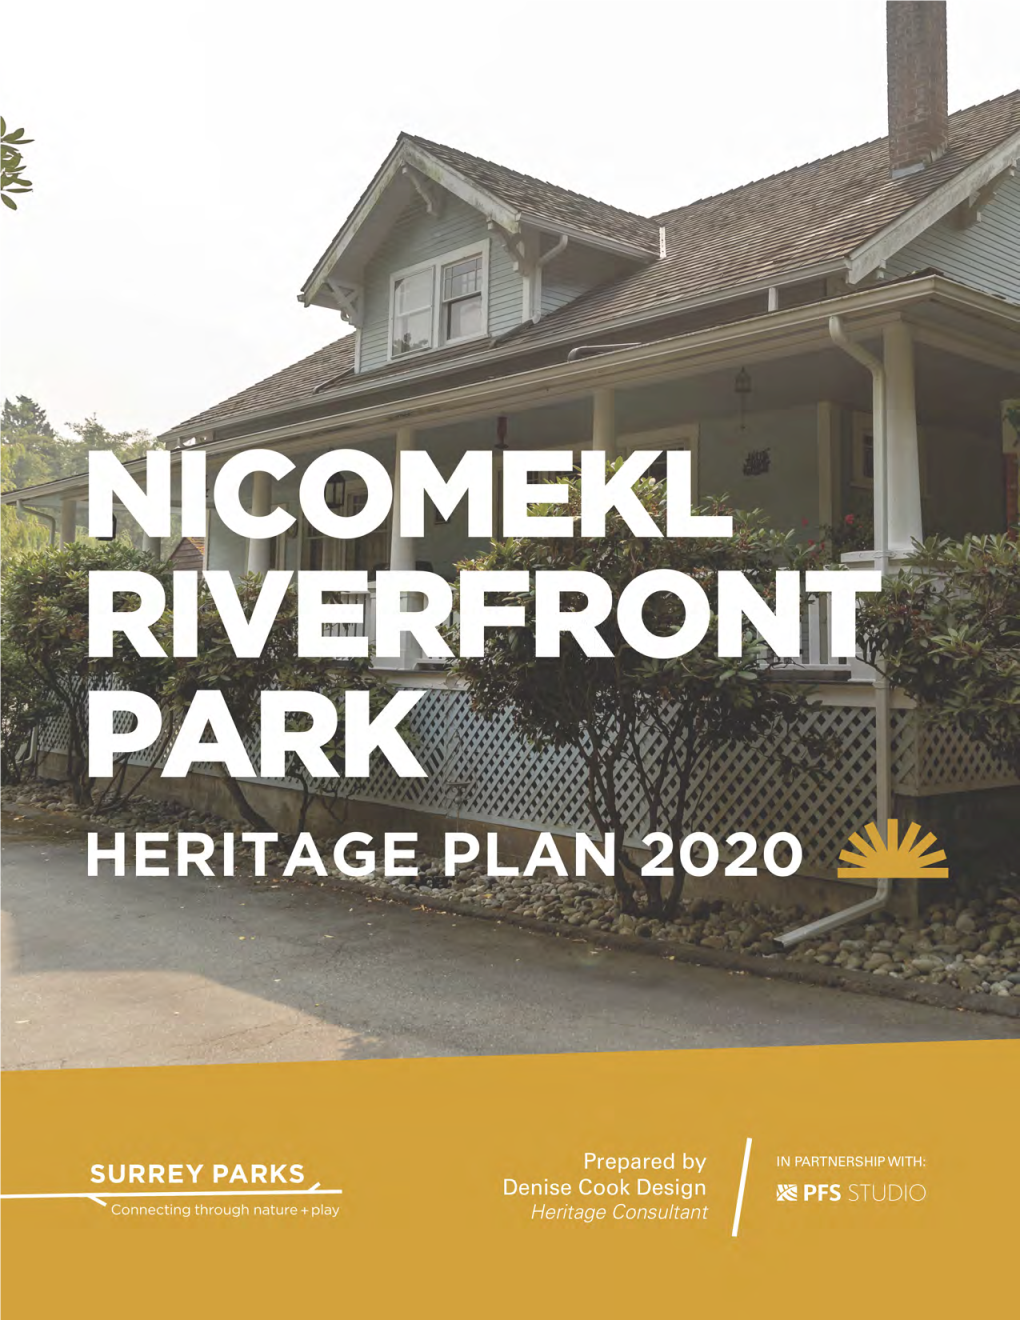 Nicomekl Riverfront Park Heritage Plan